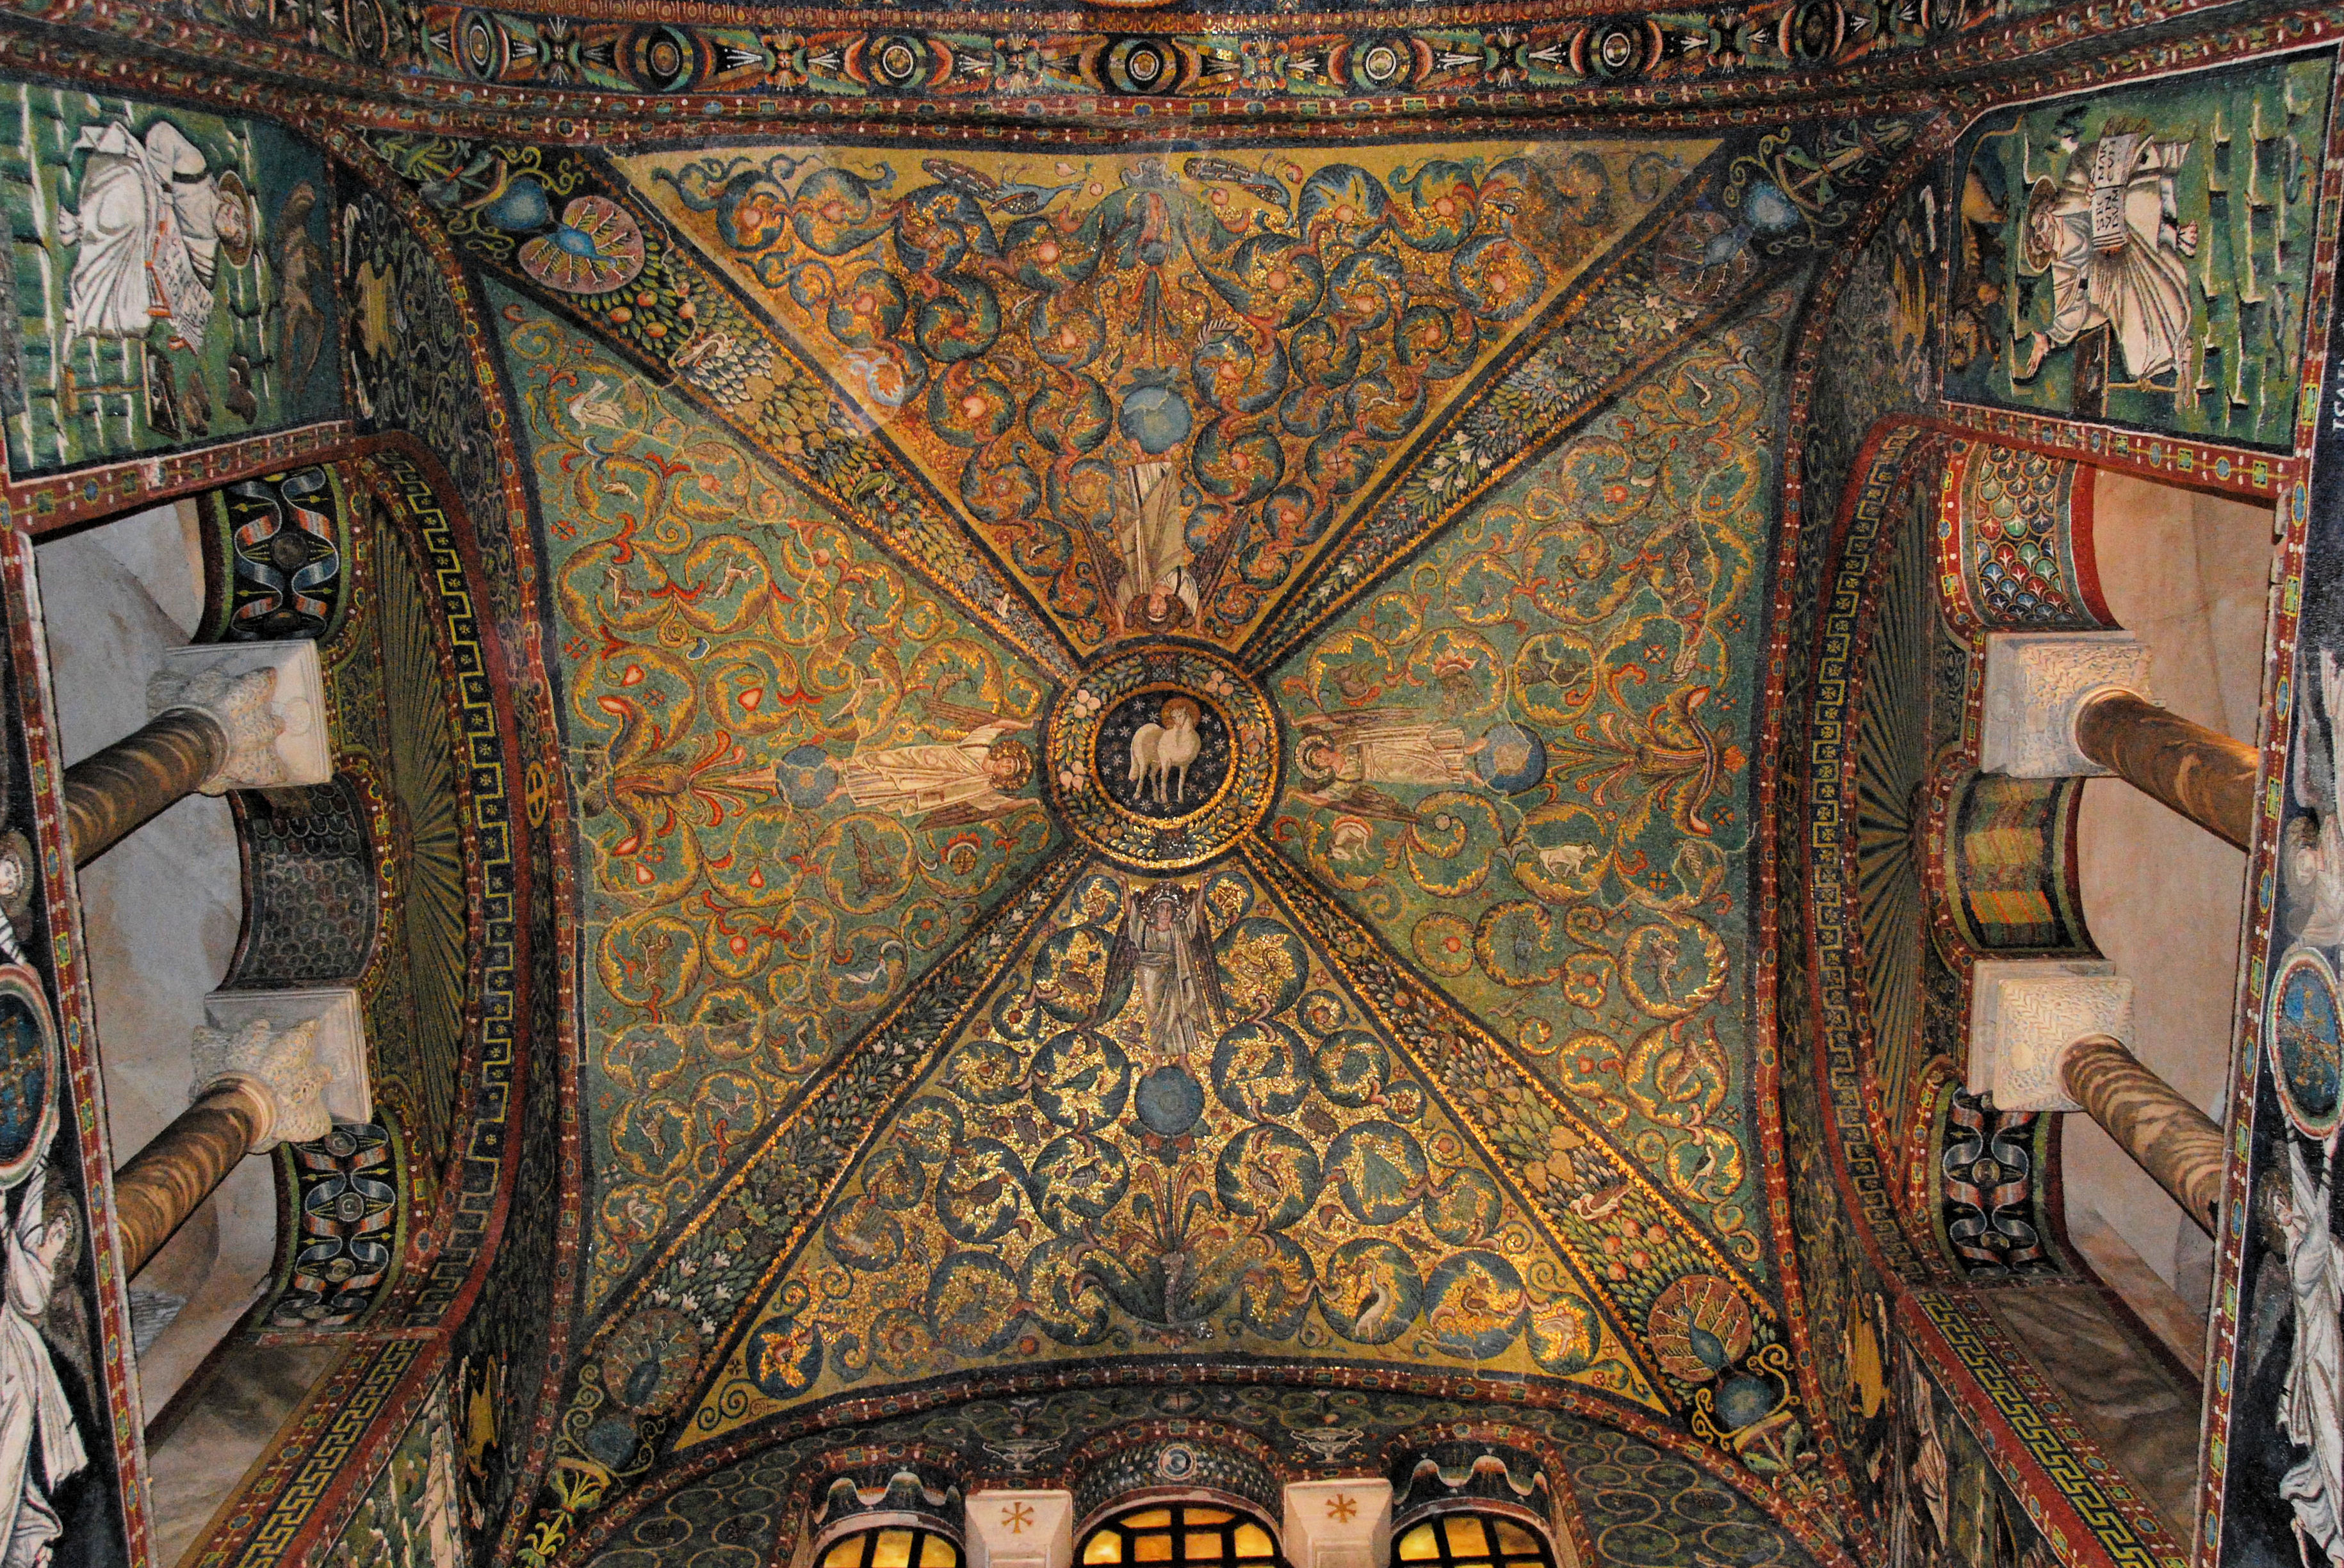 San Vitale mosaic ceiling